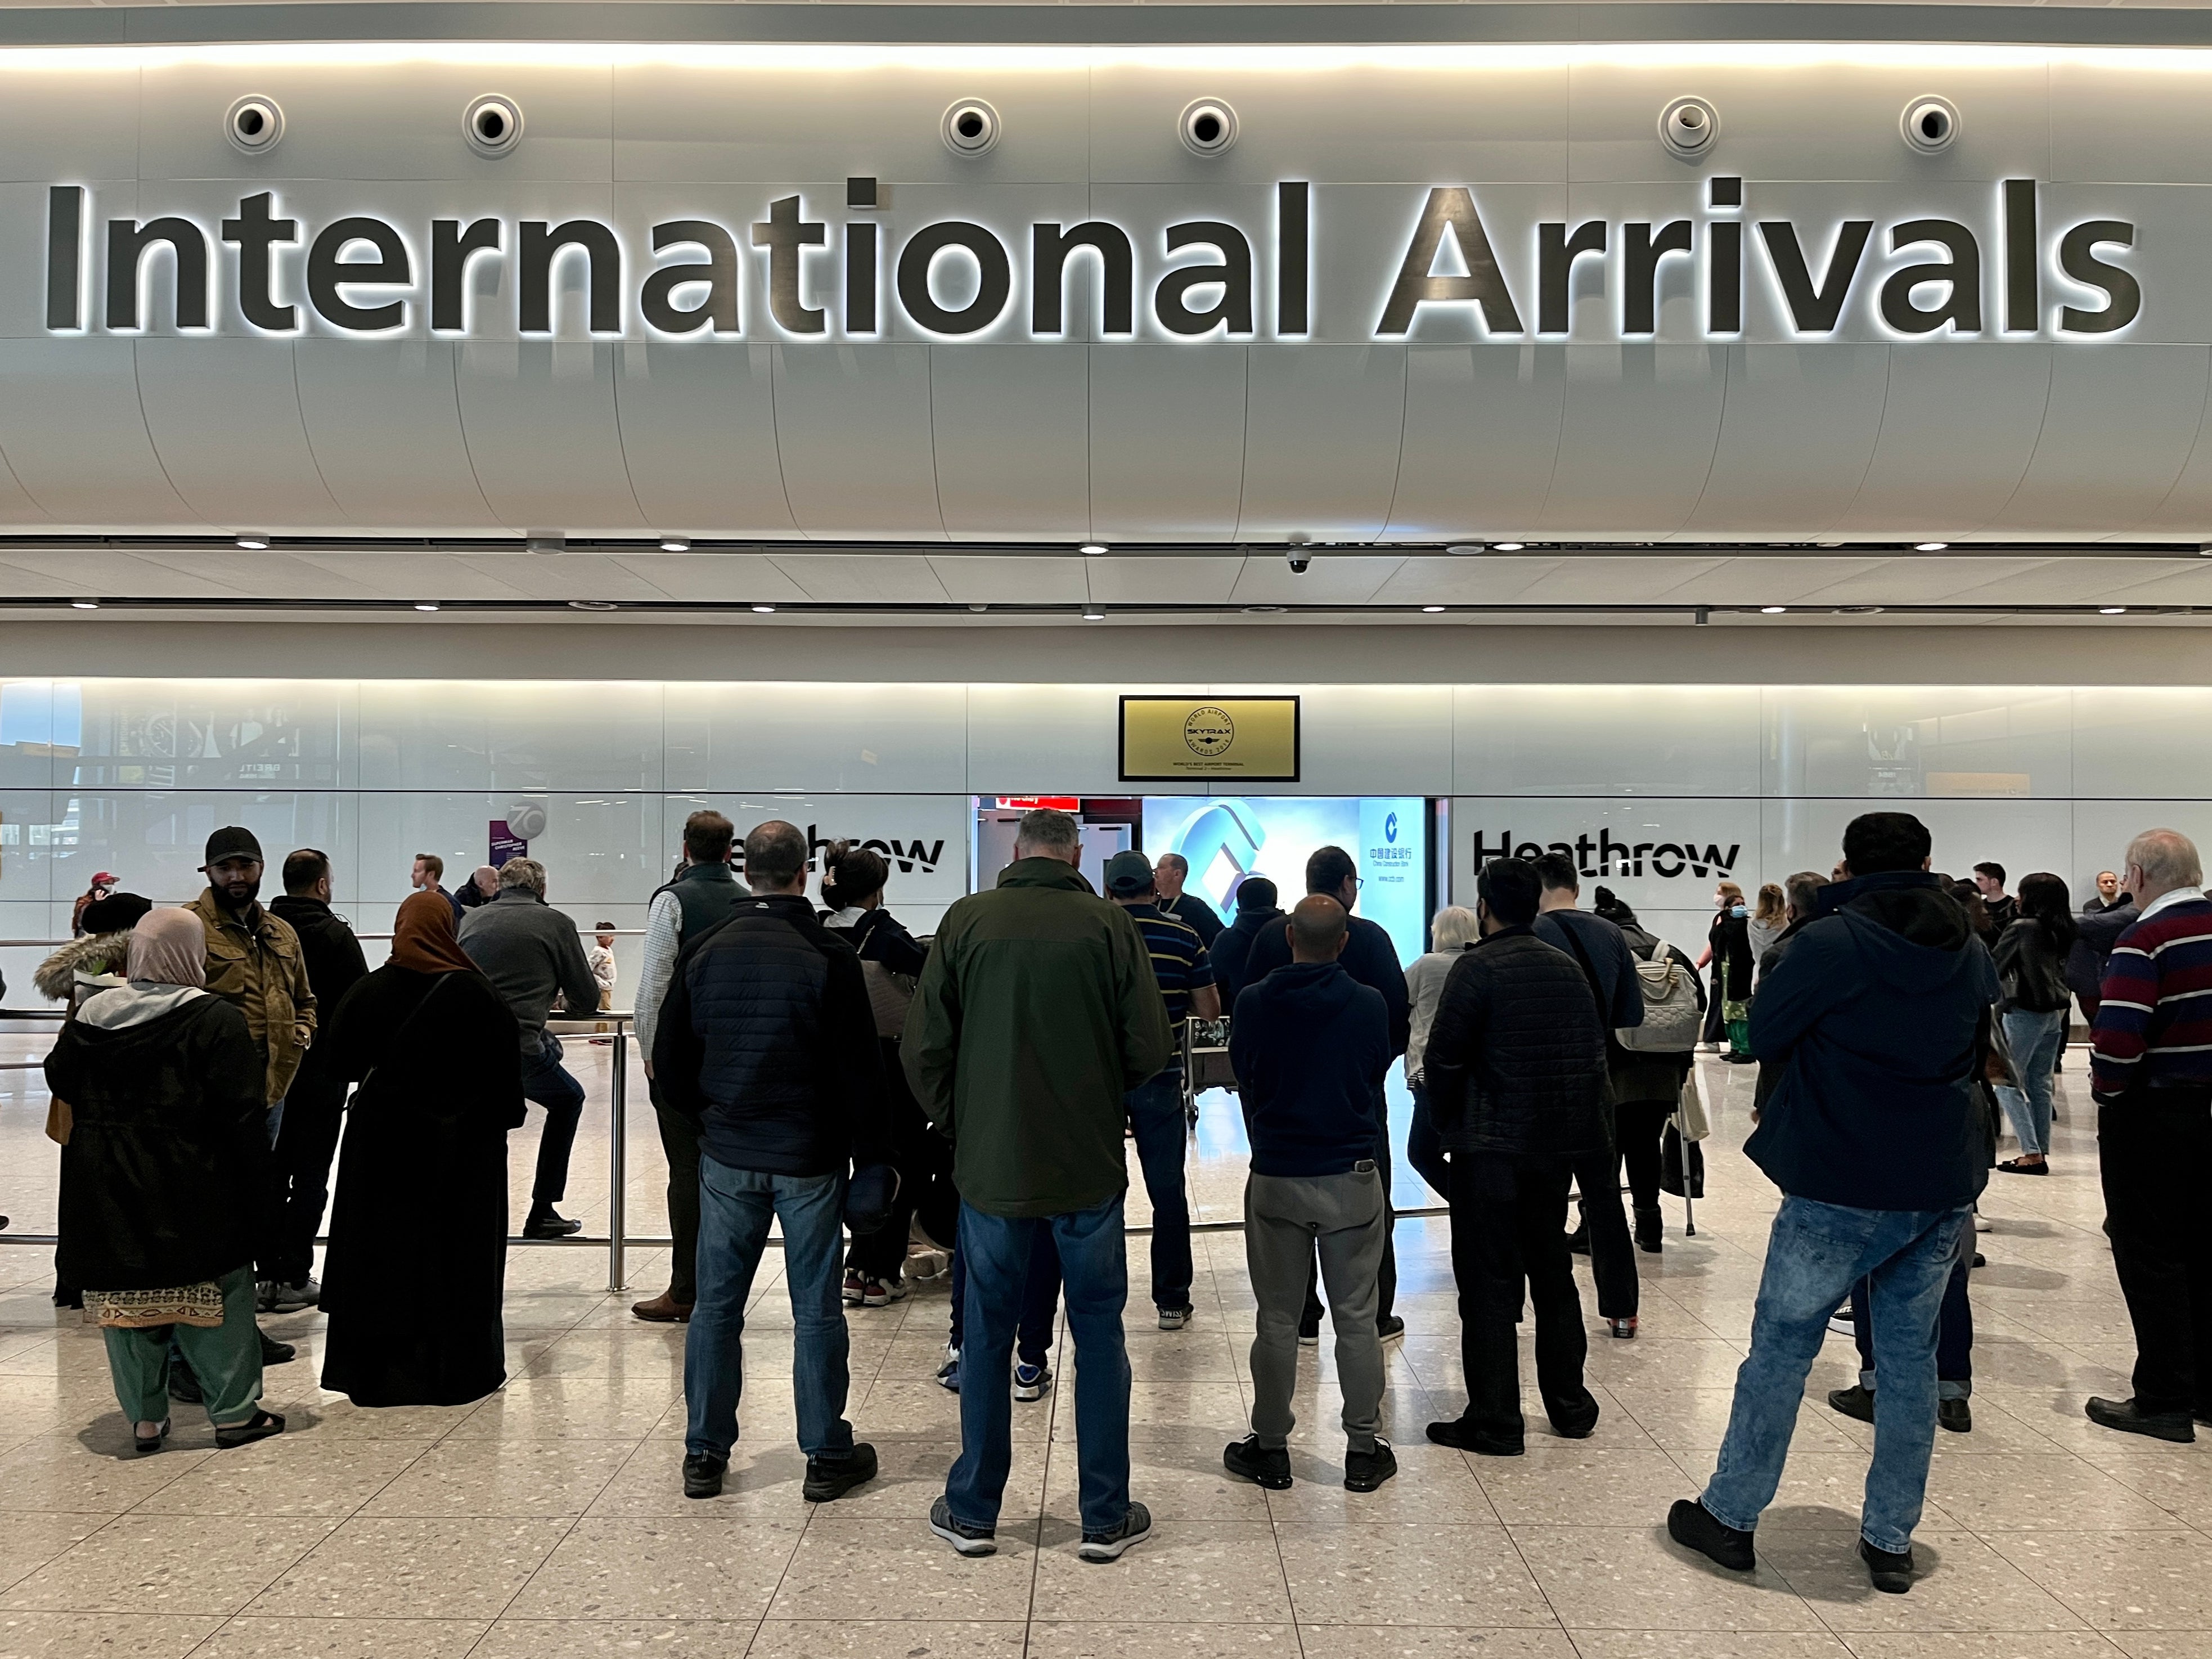 Waiting game: International Arrivals at London Heathrow Terminal 5